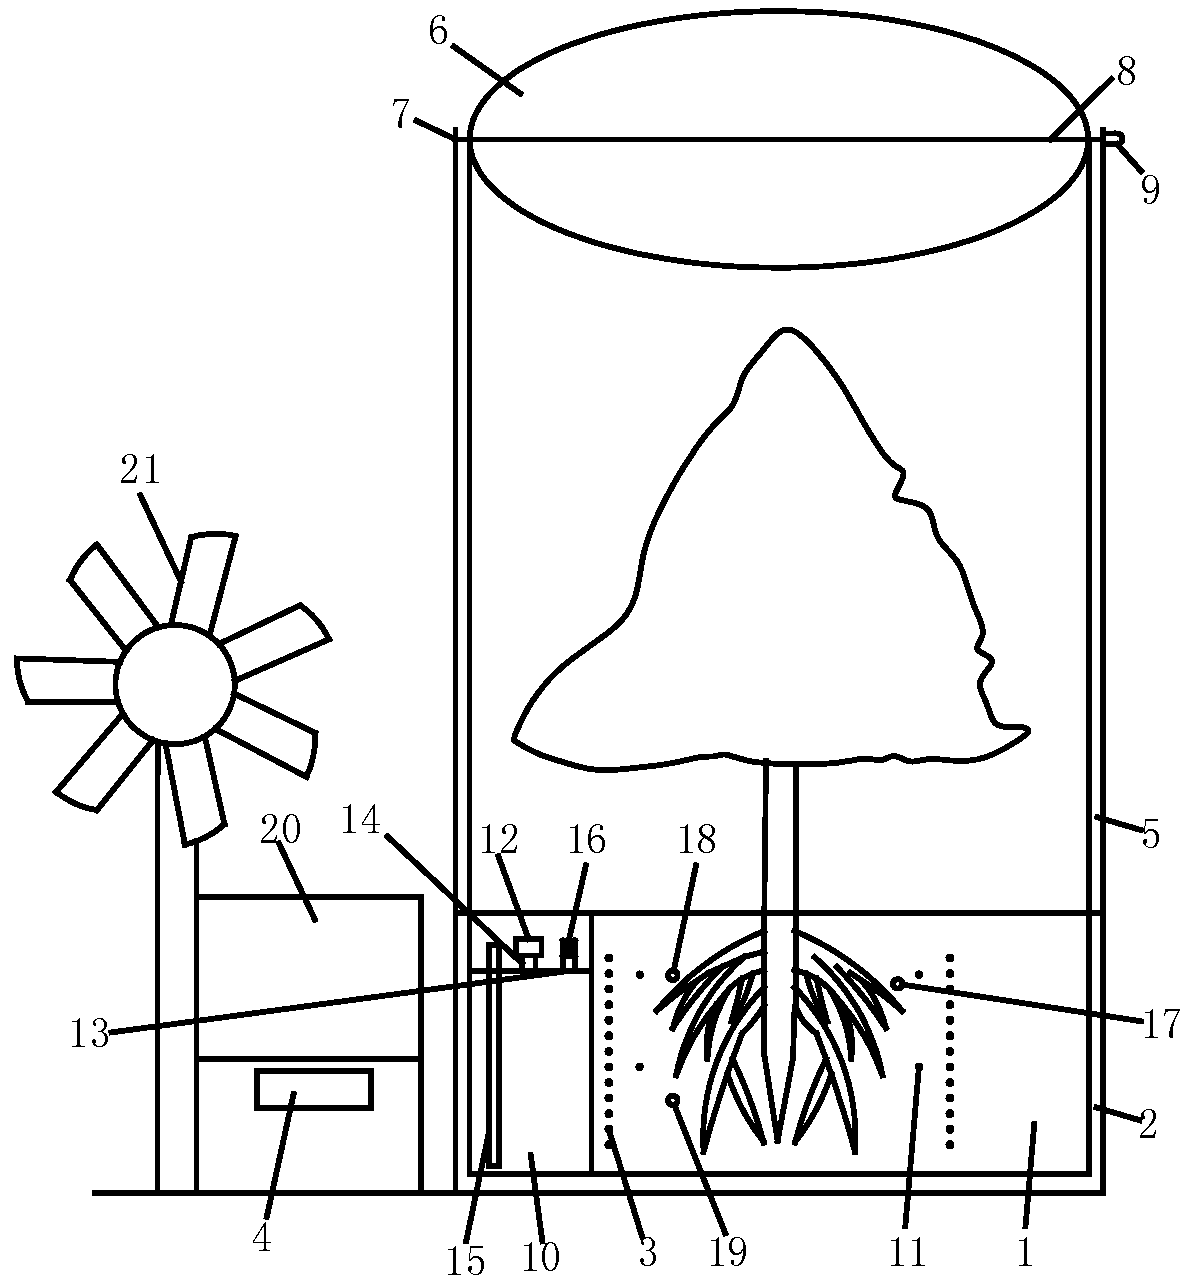 Alpine-region tree planting device and method